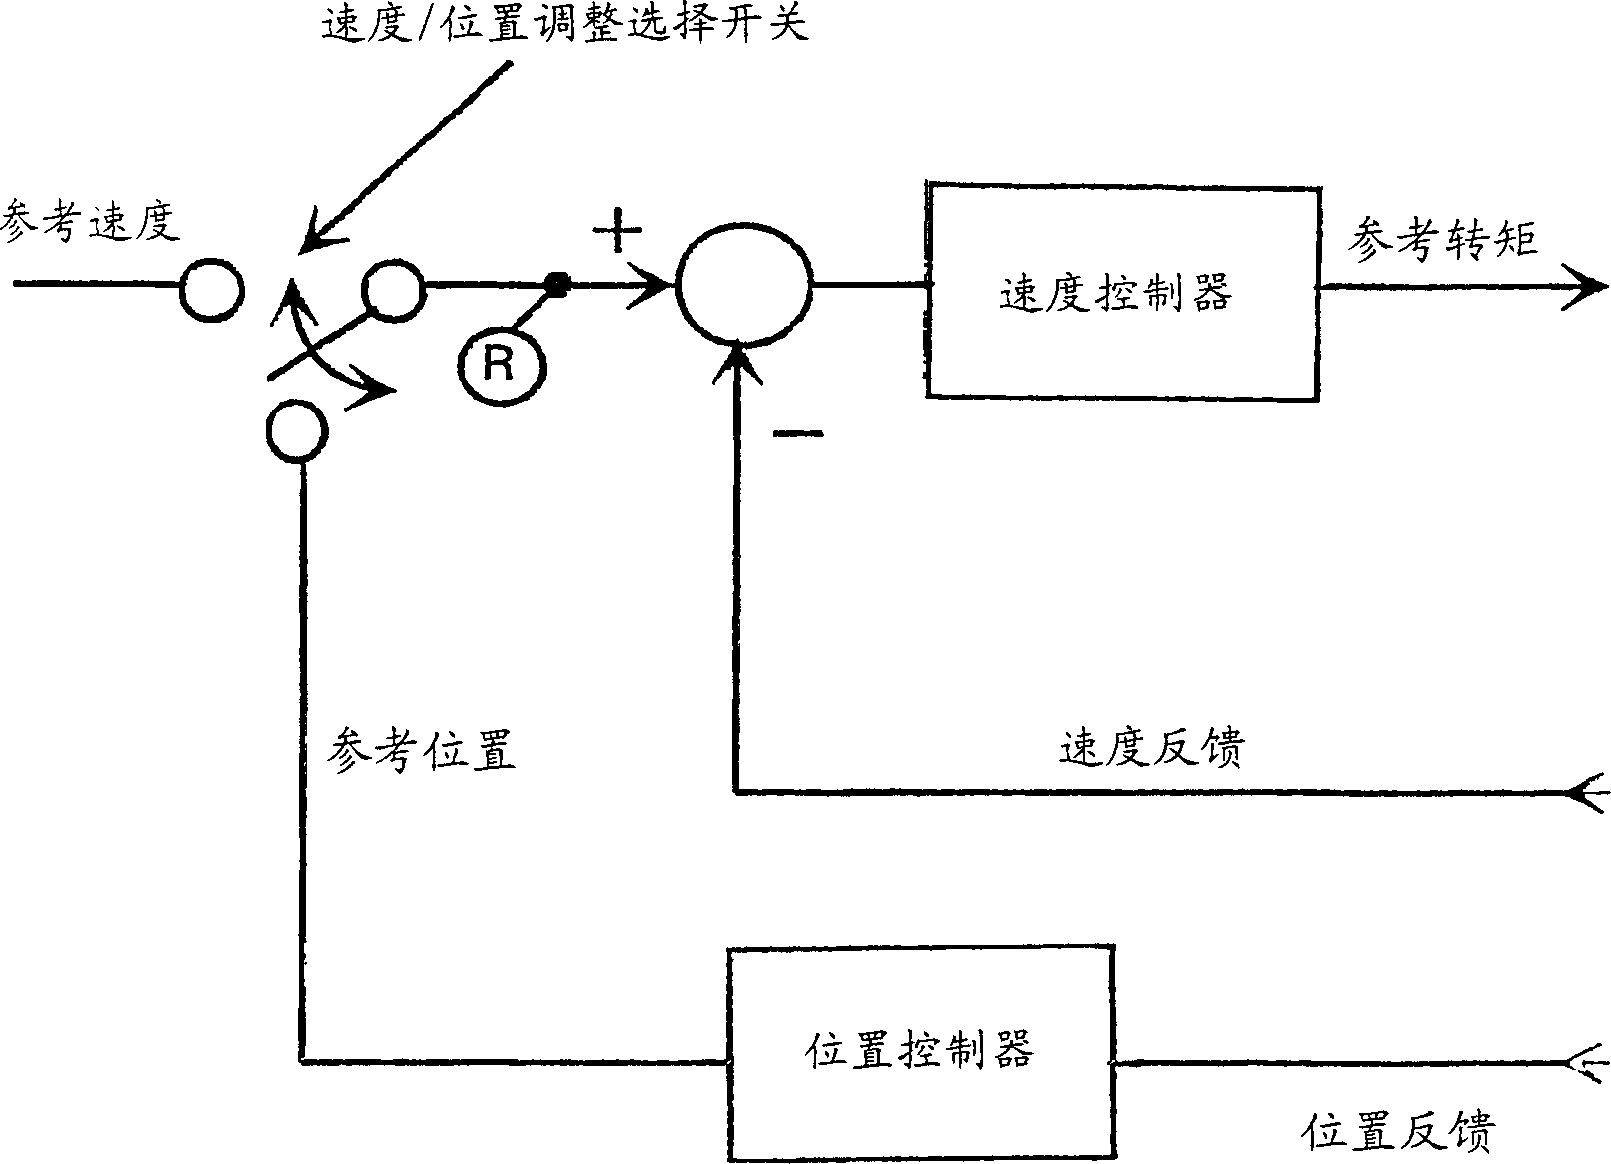 Elevator control method